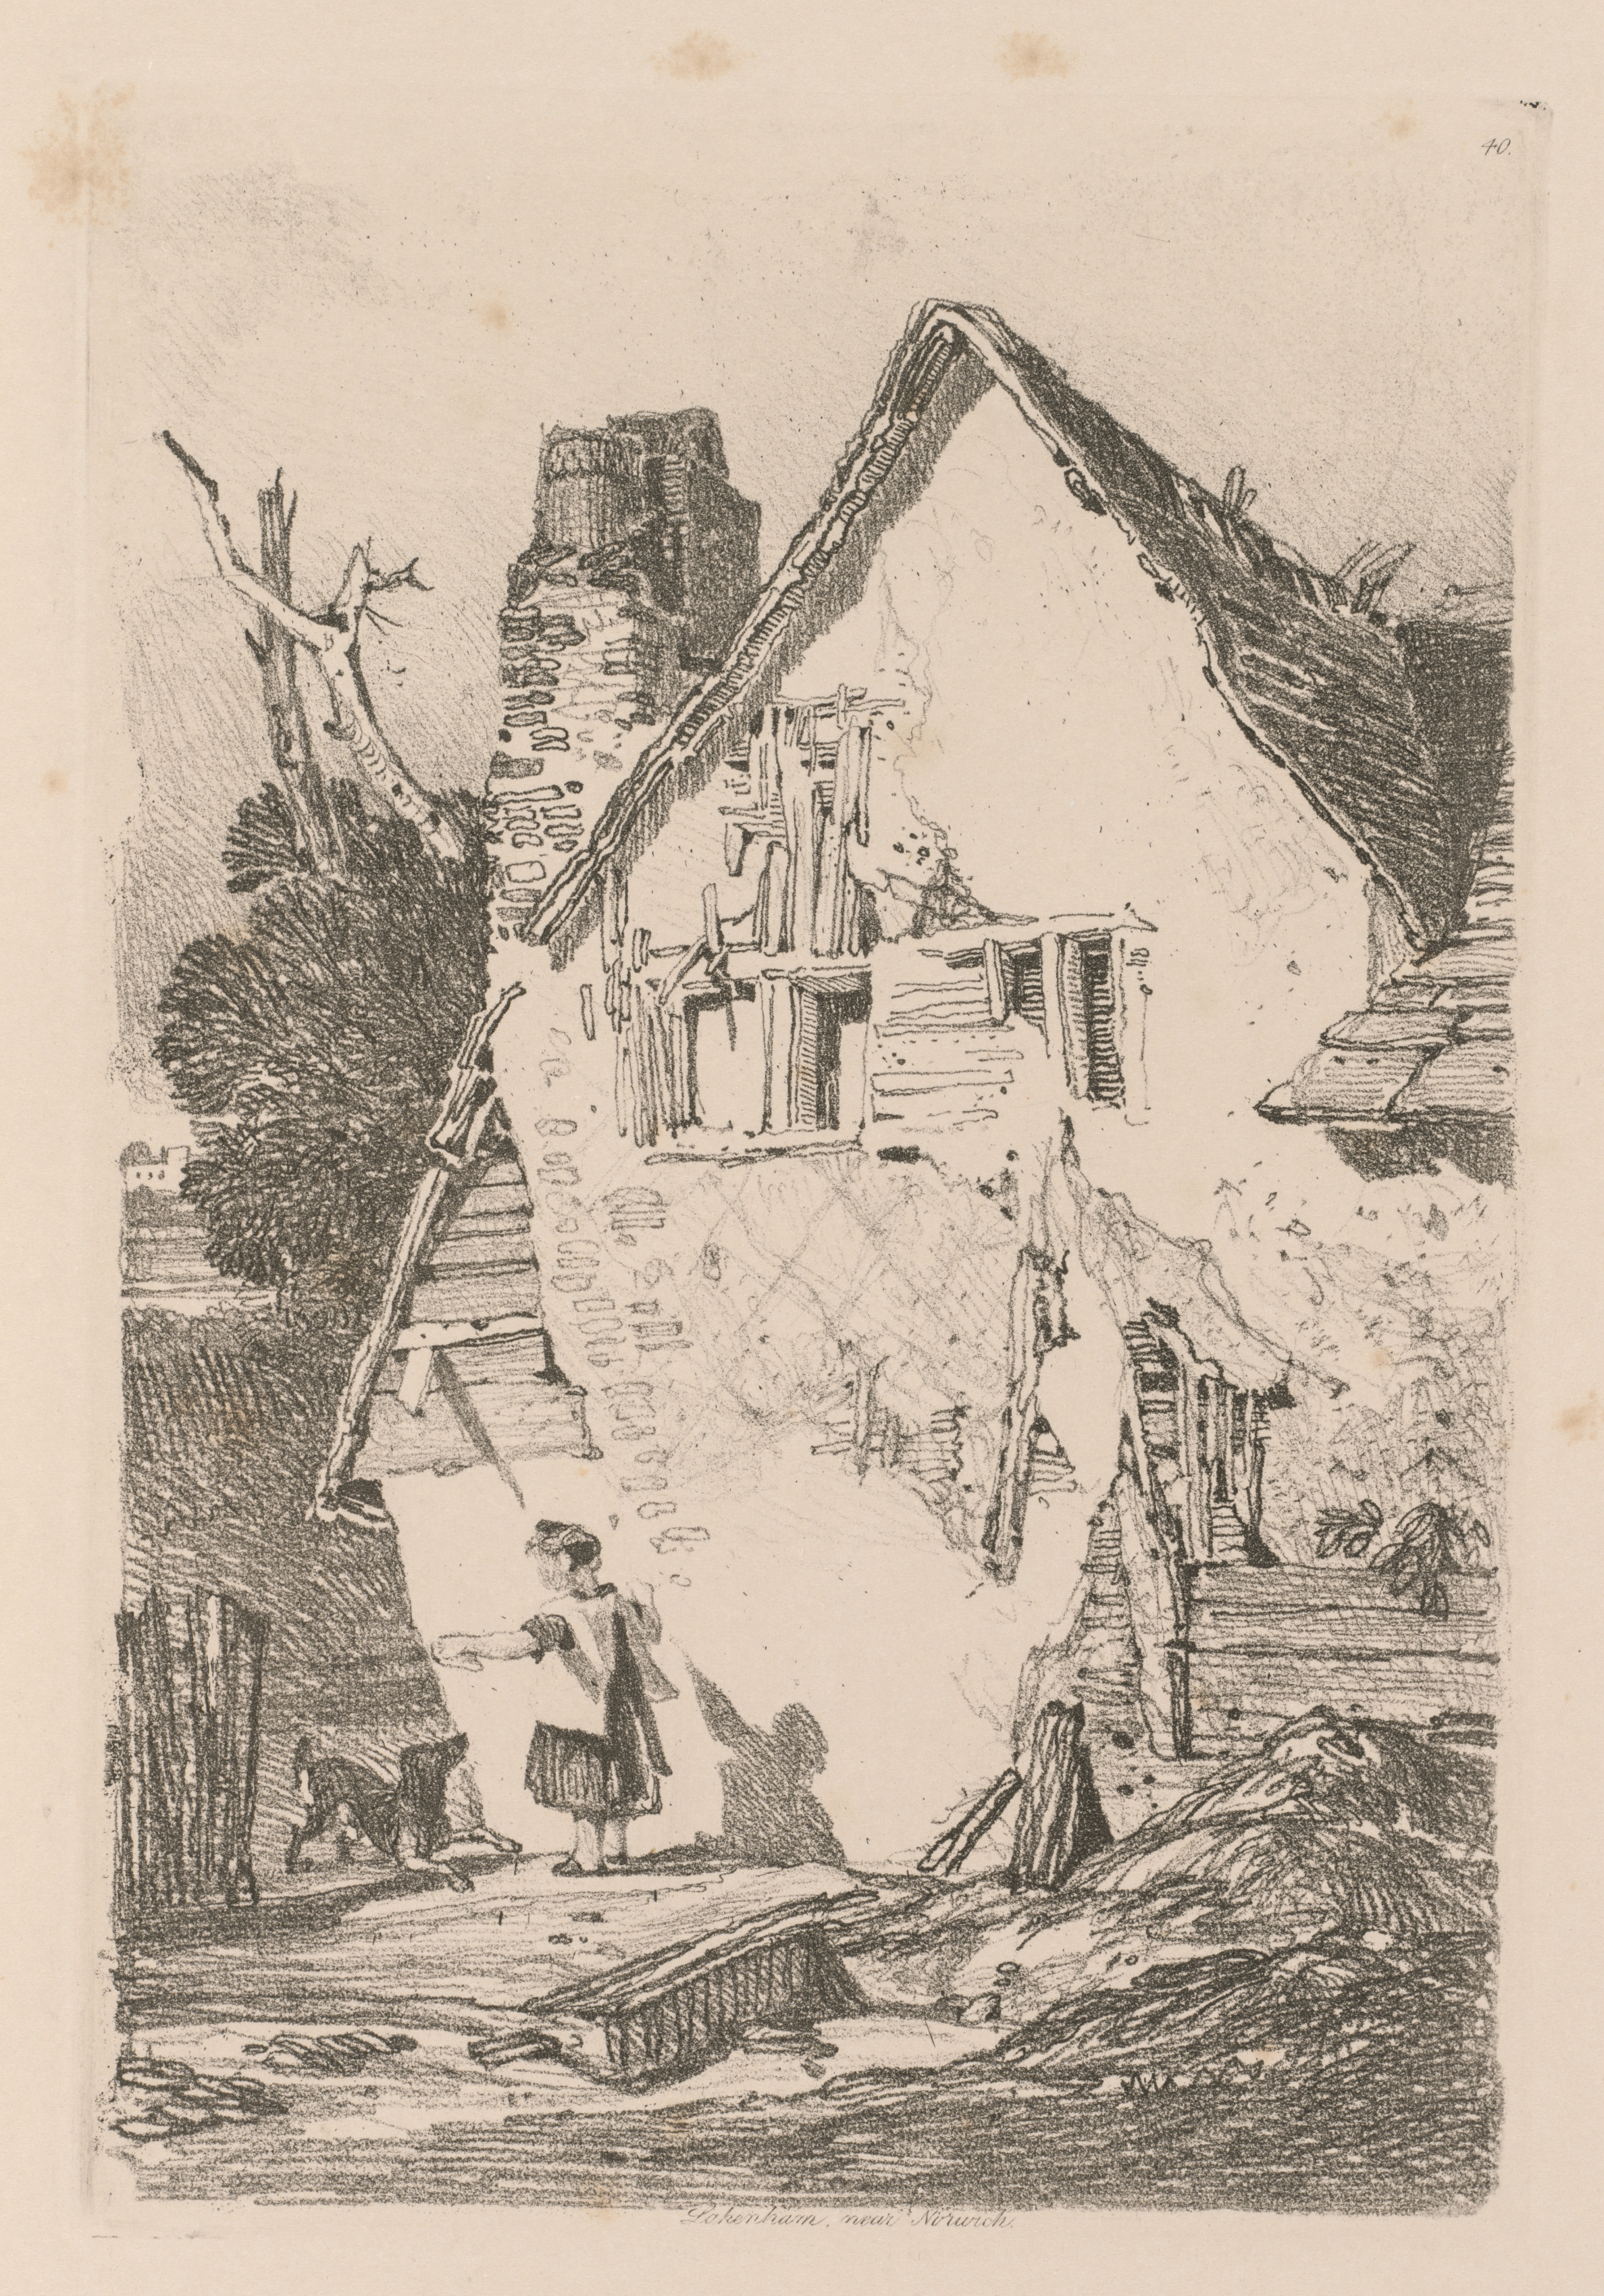 Liber Studiorum: Plate 40, Lakenham, near Norwich